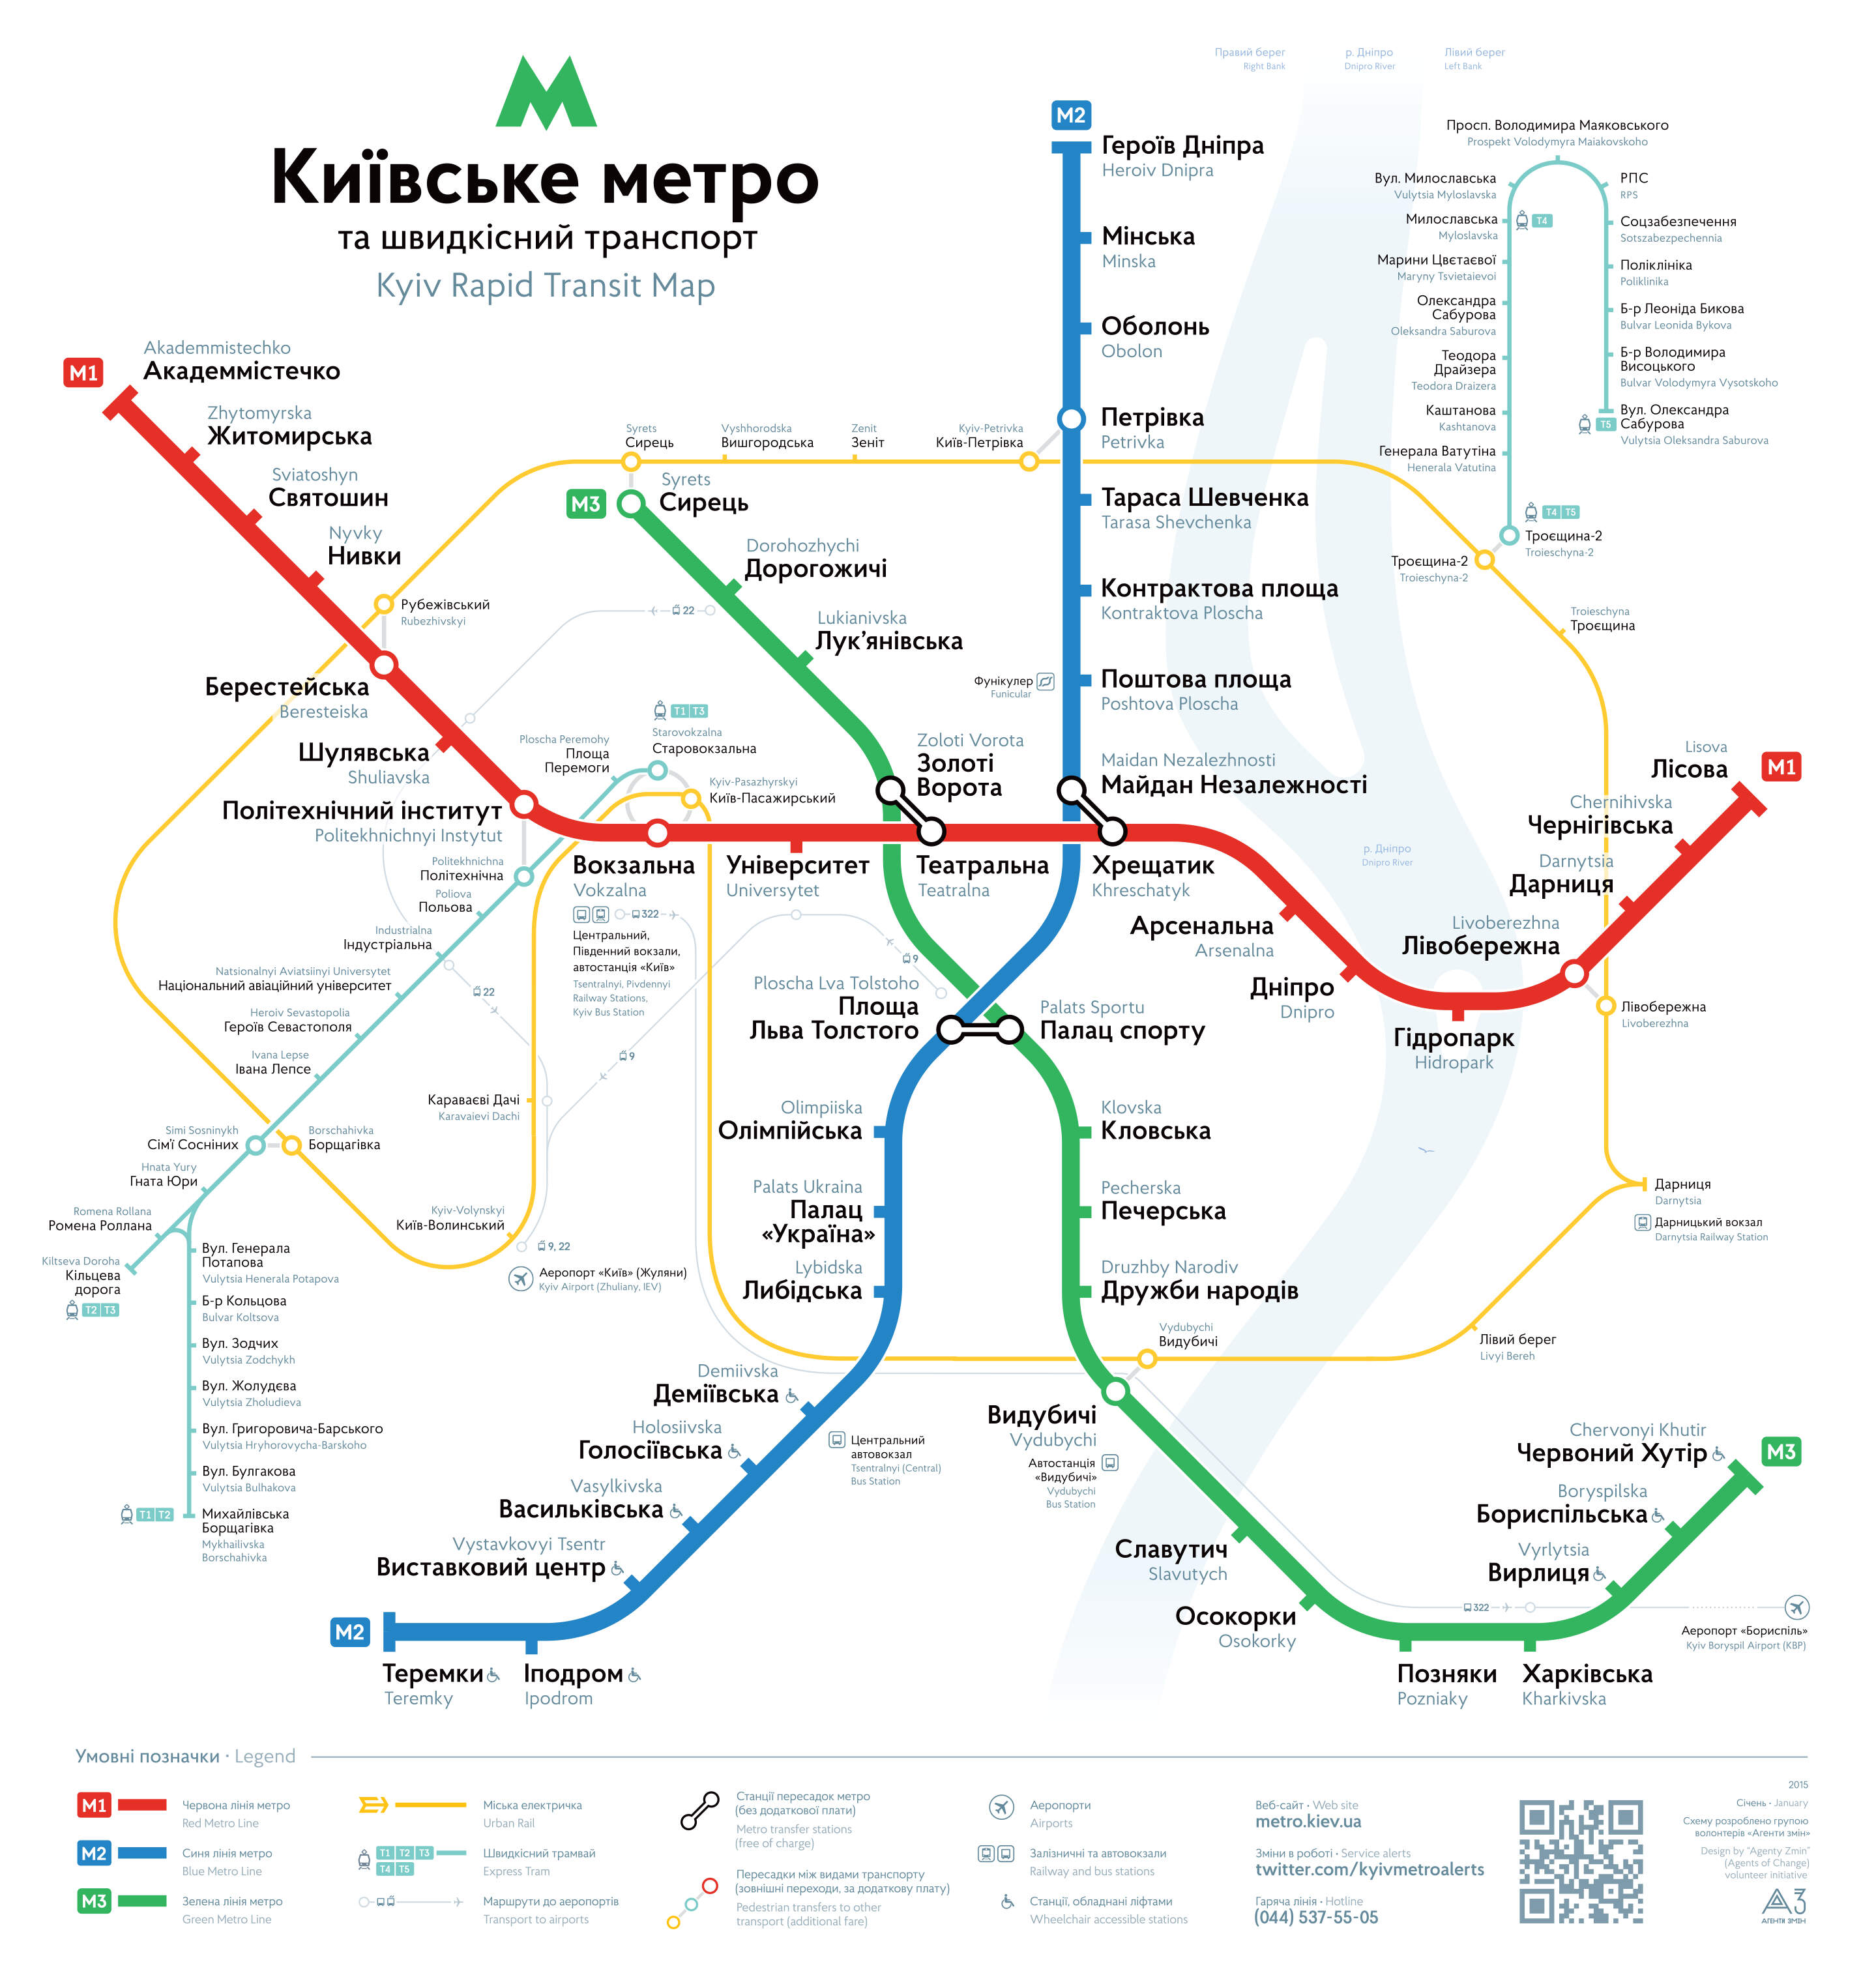 Het metronet van Kiëv